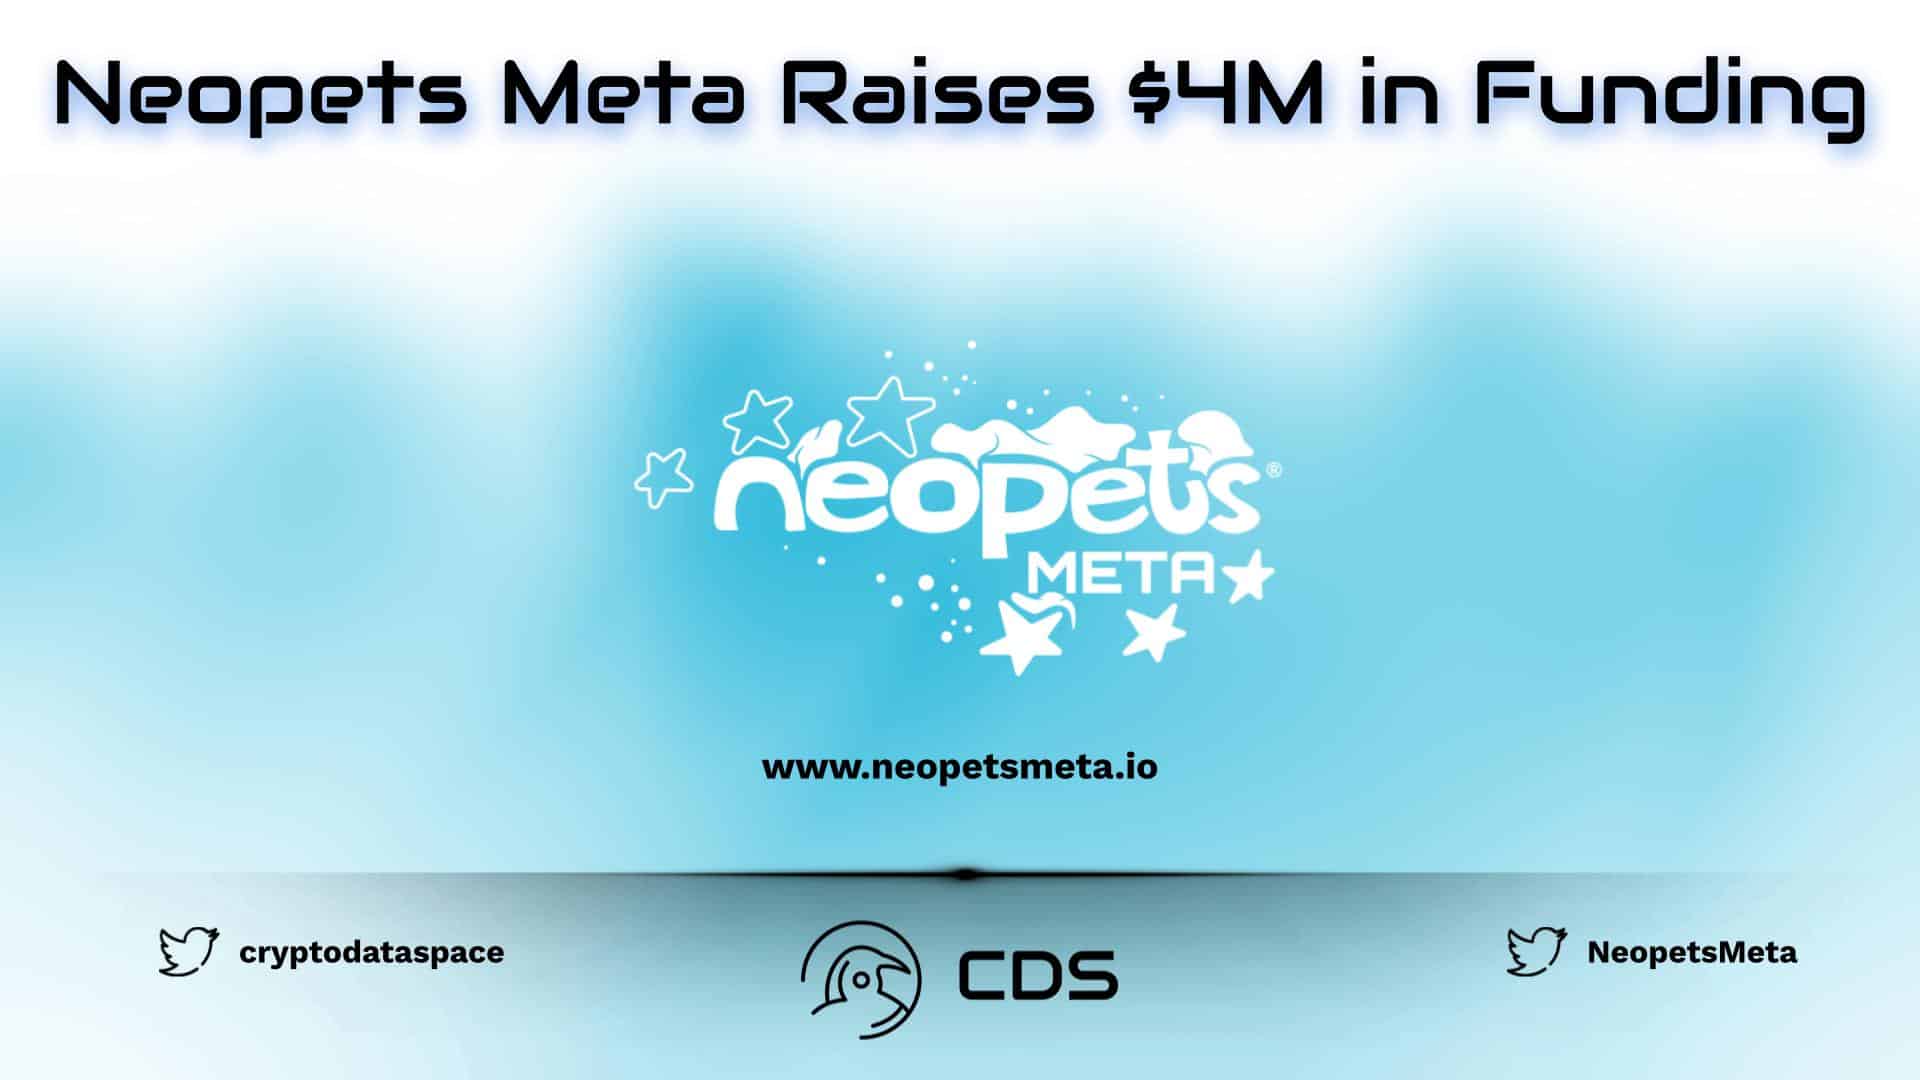 Neopets Meta Raises $4M in Funding